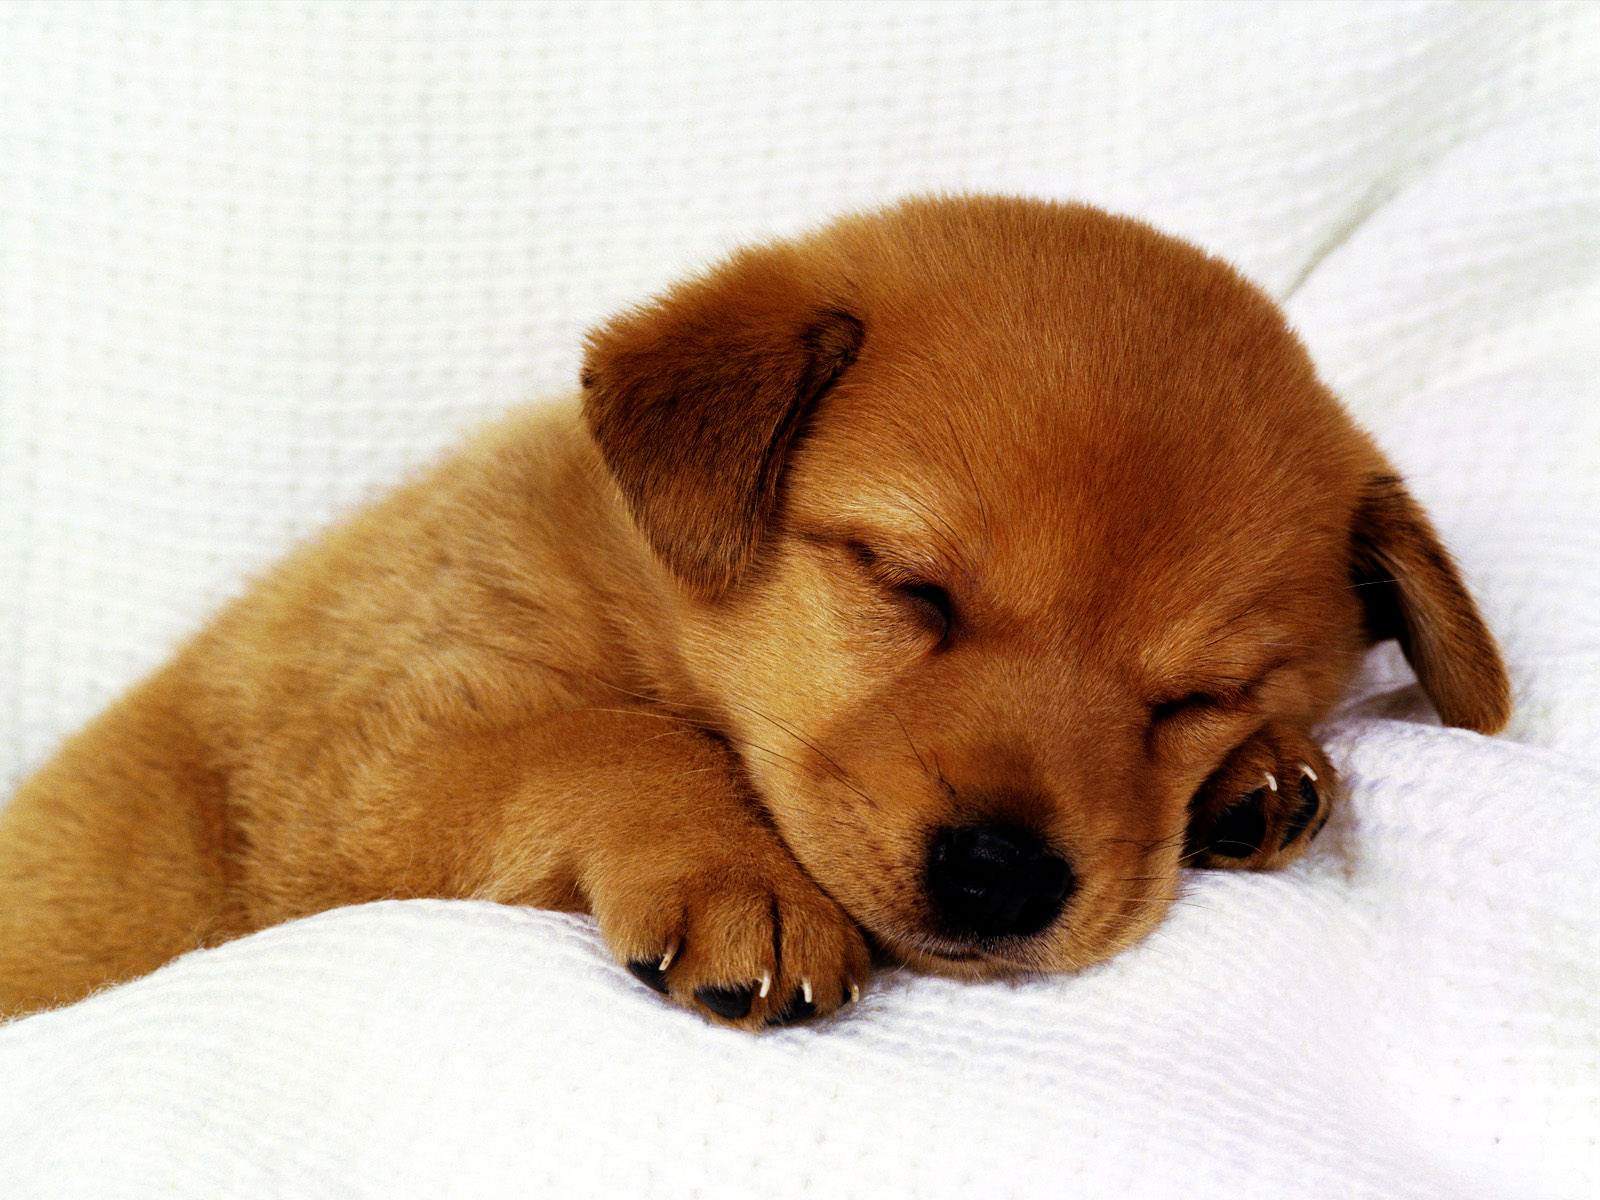 46+] Cute Puppy Wallpaper Dogs - WallpaperSafari